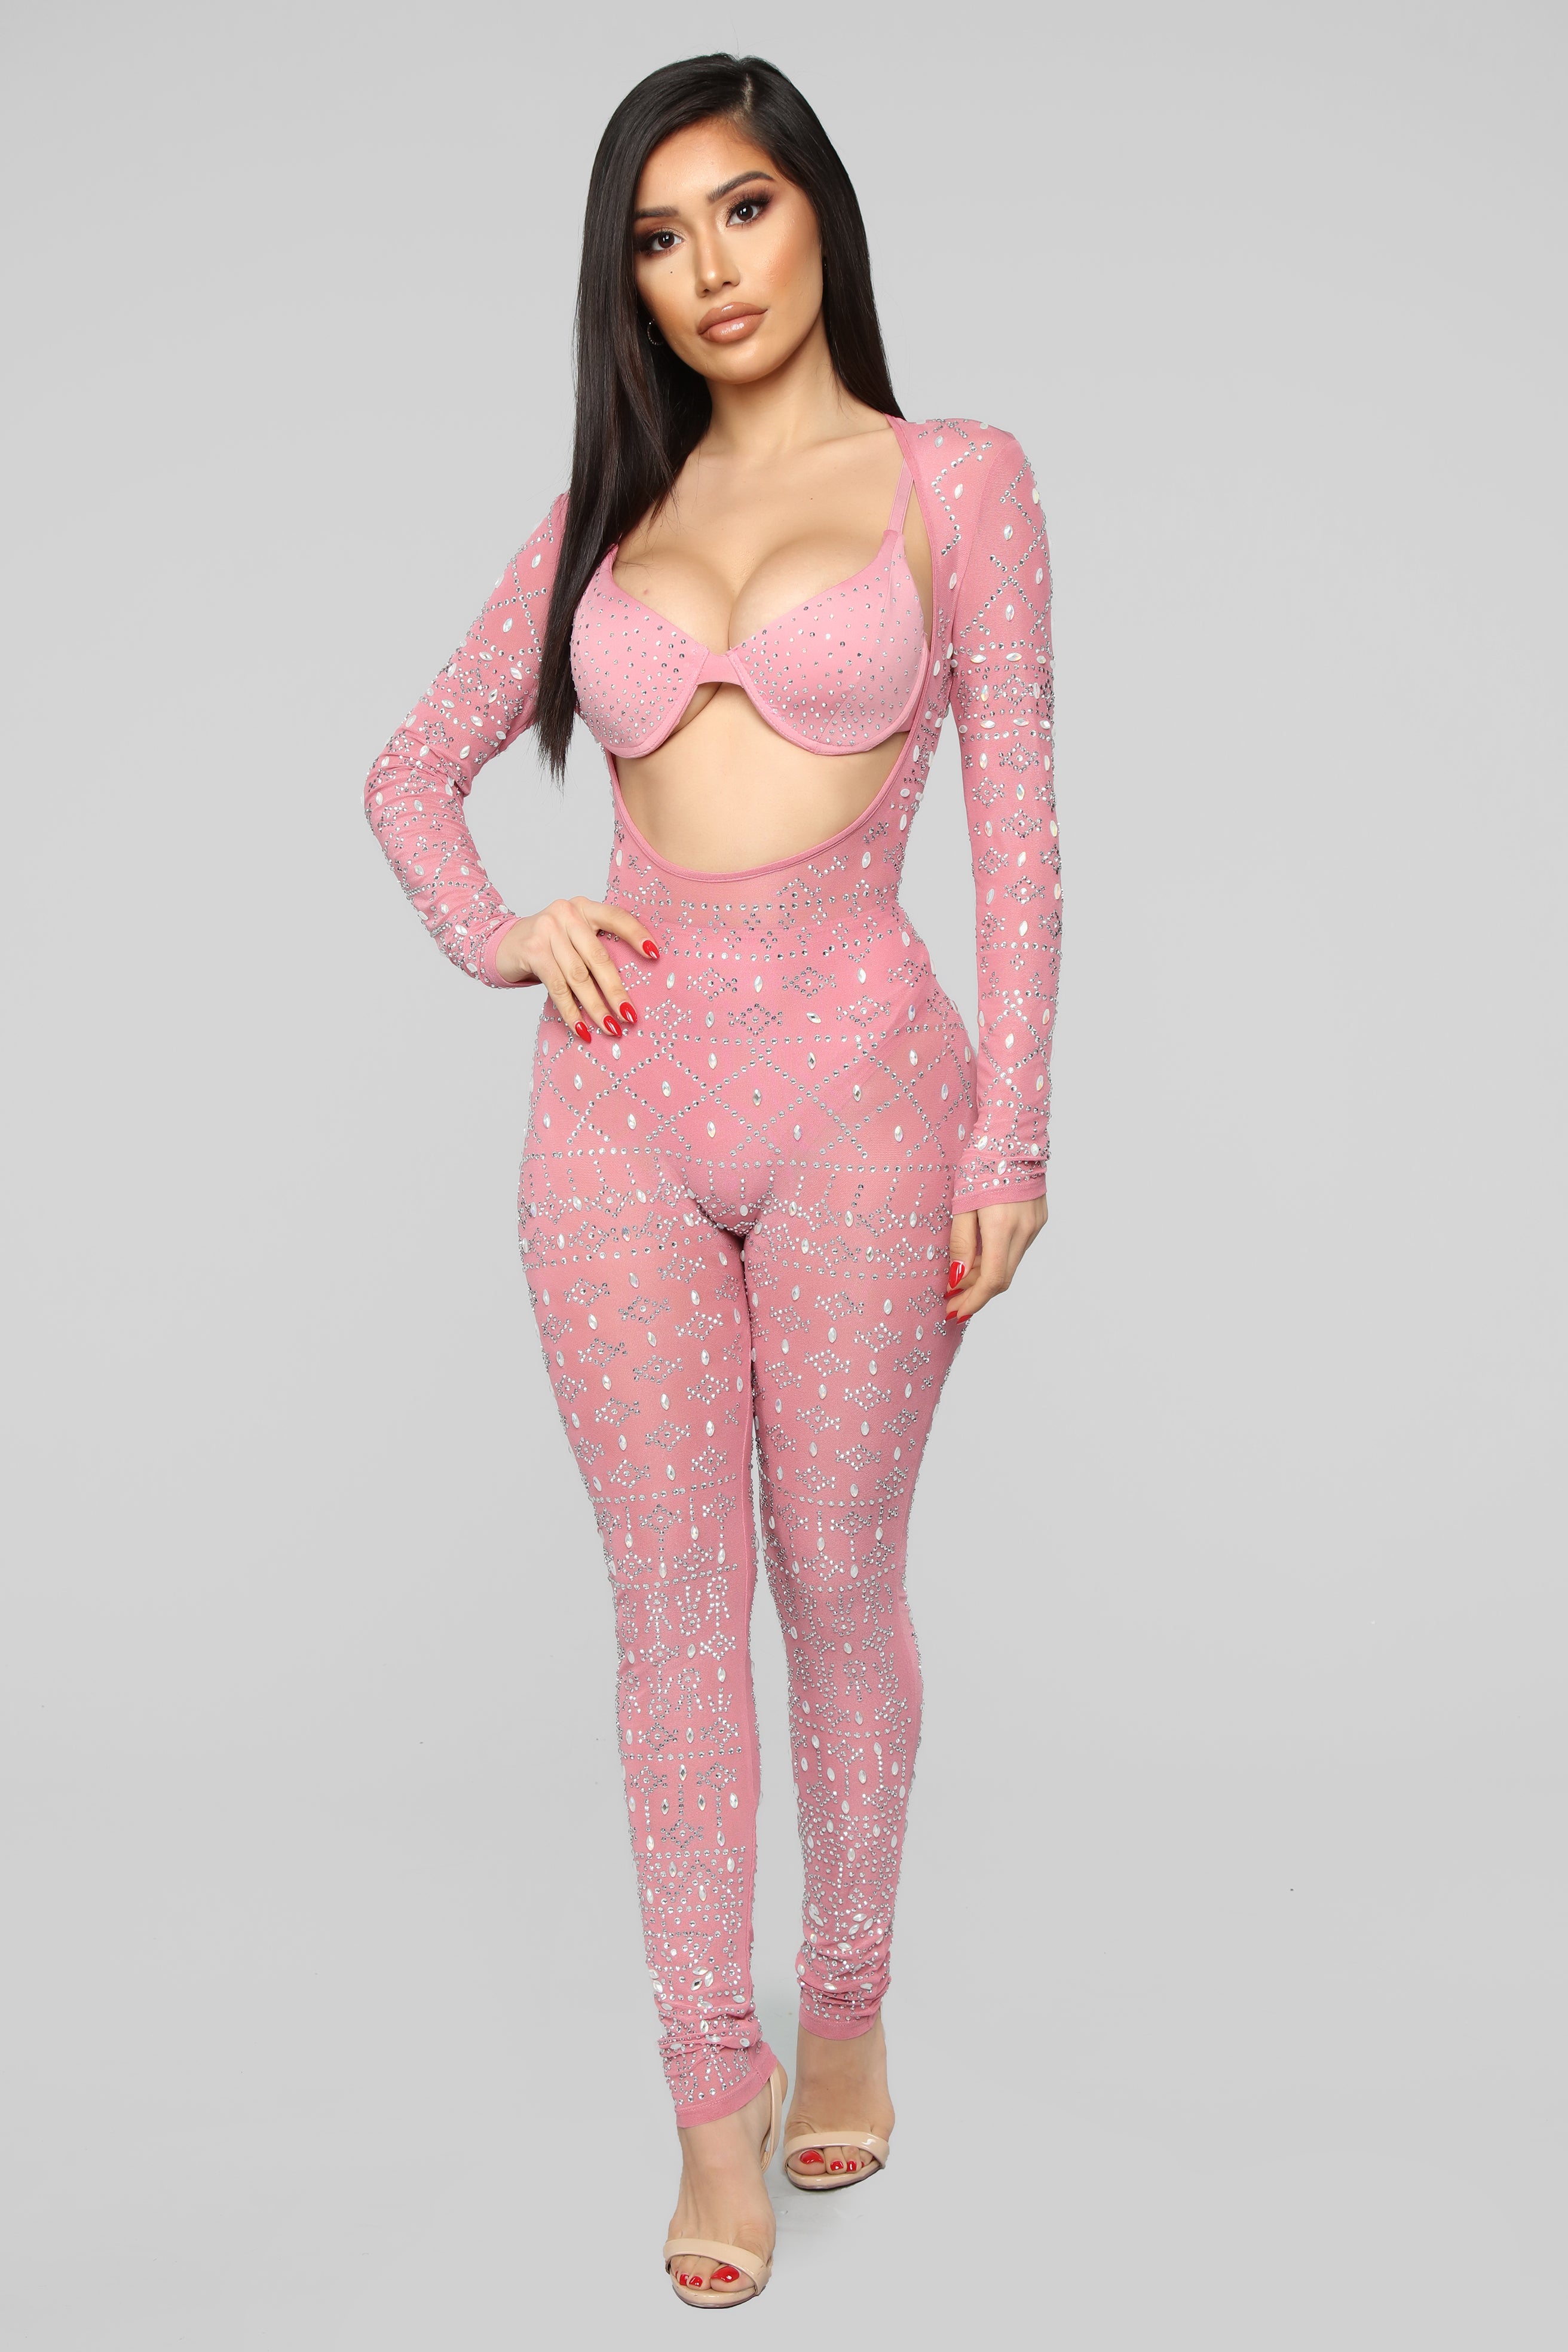 fashion nova hot pink jumpsuit